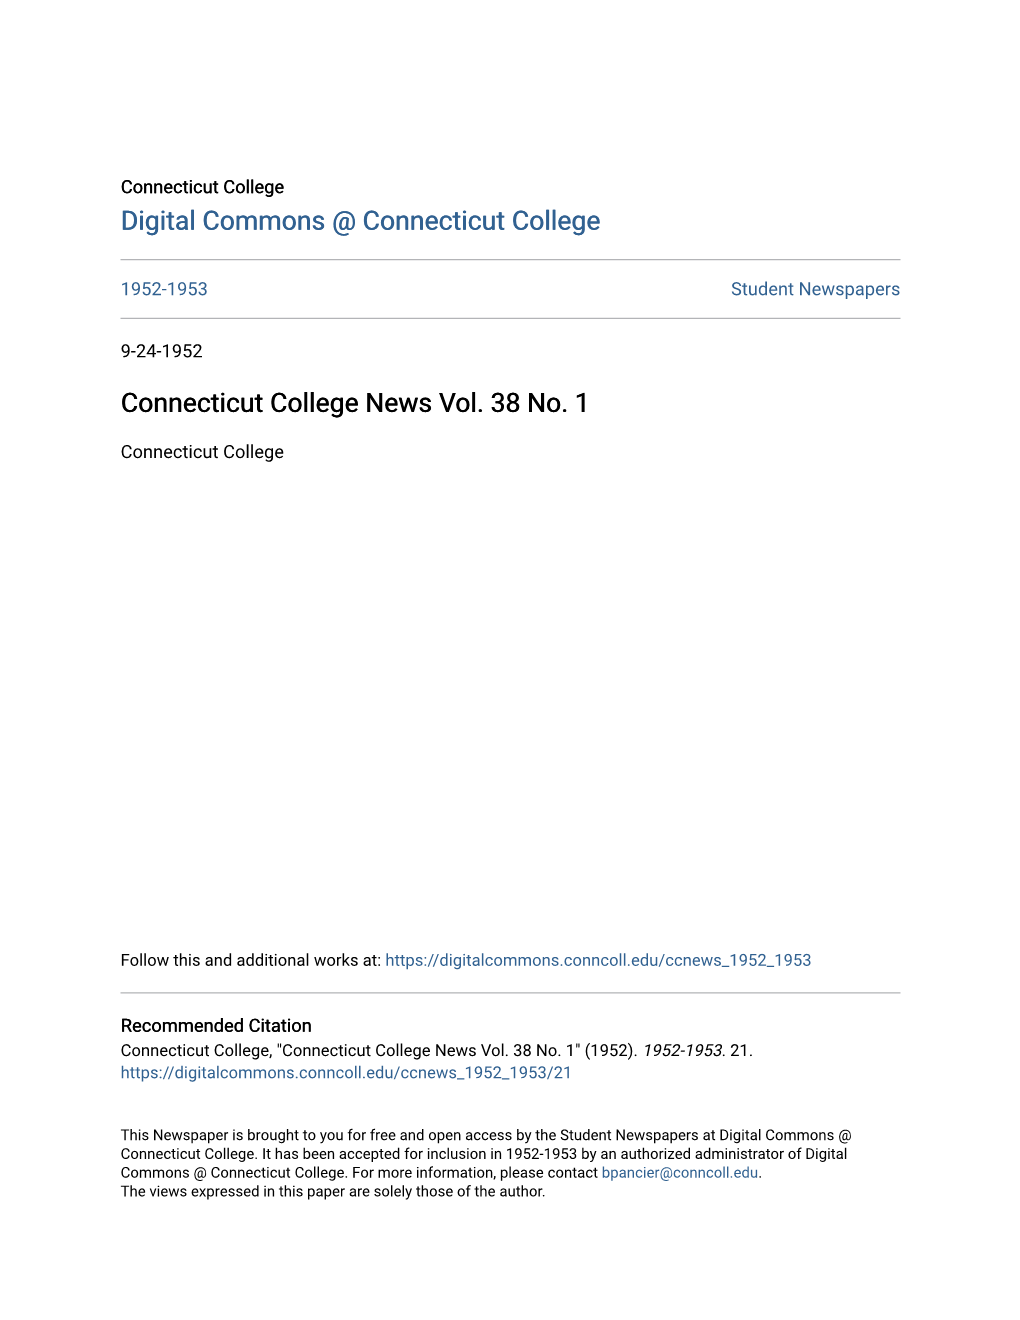 Connecticut College News Vol. 38 No. 1